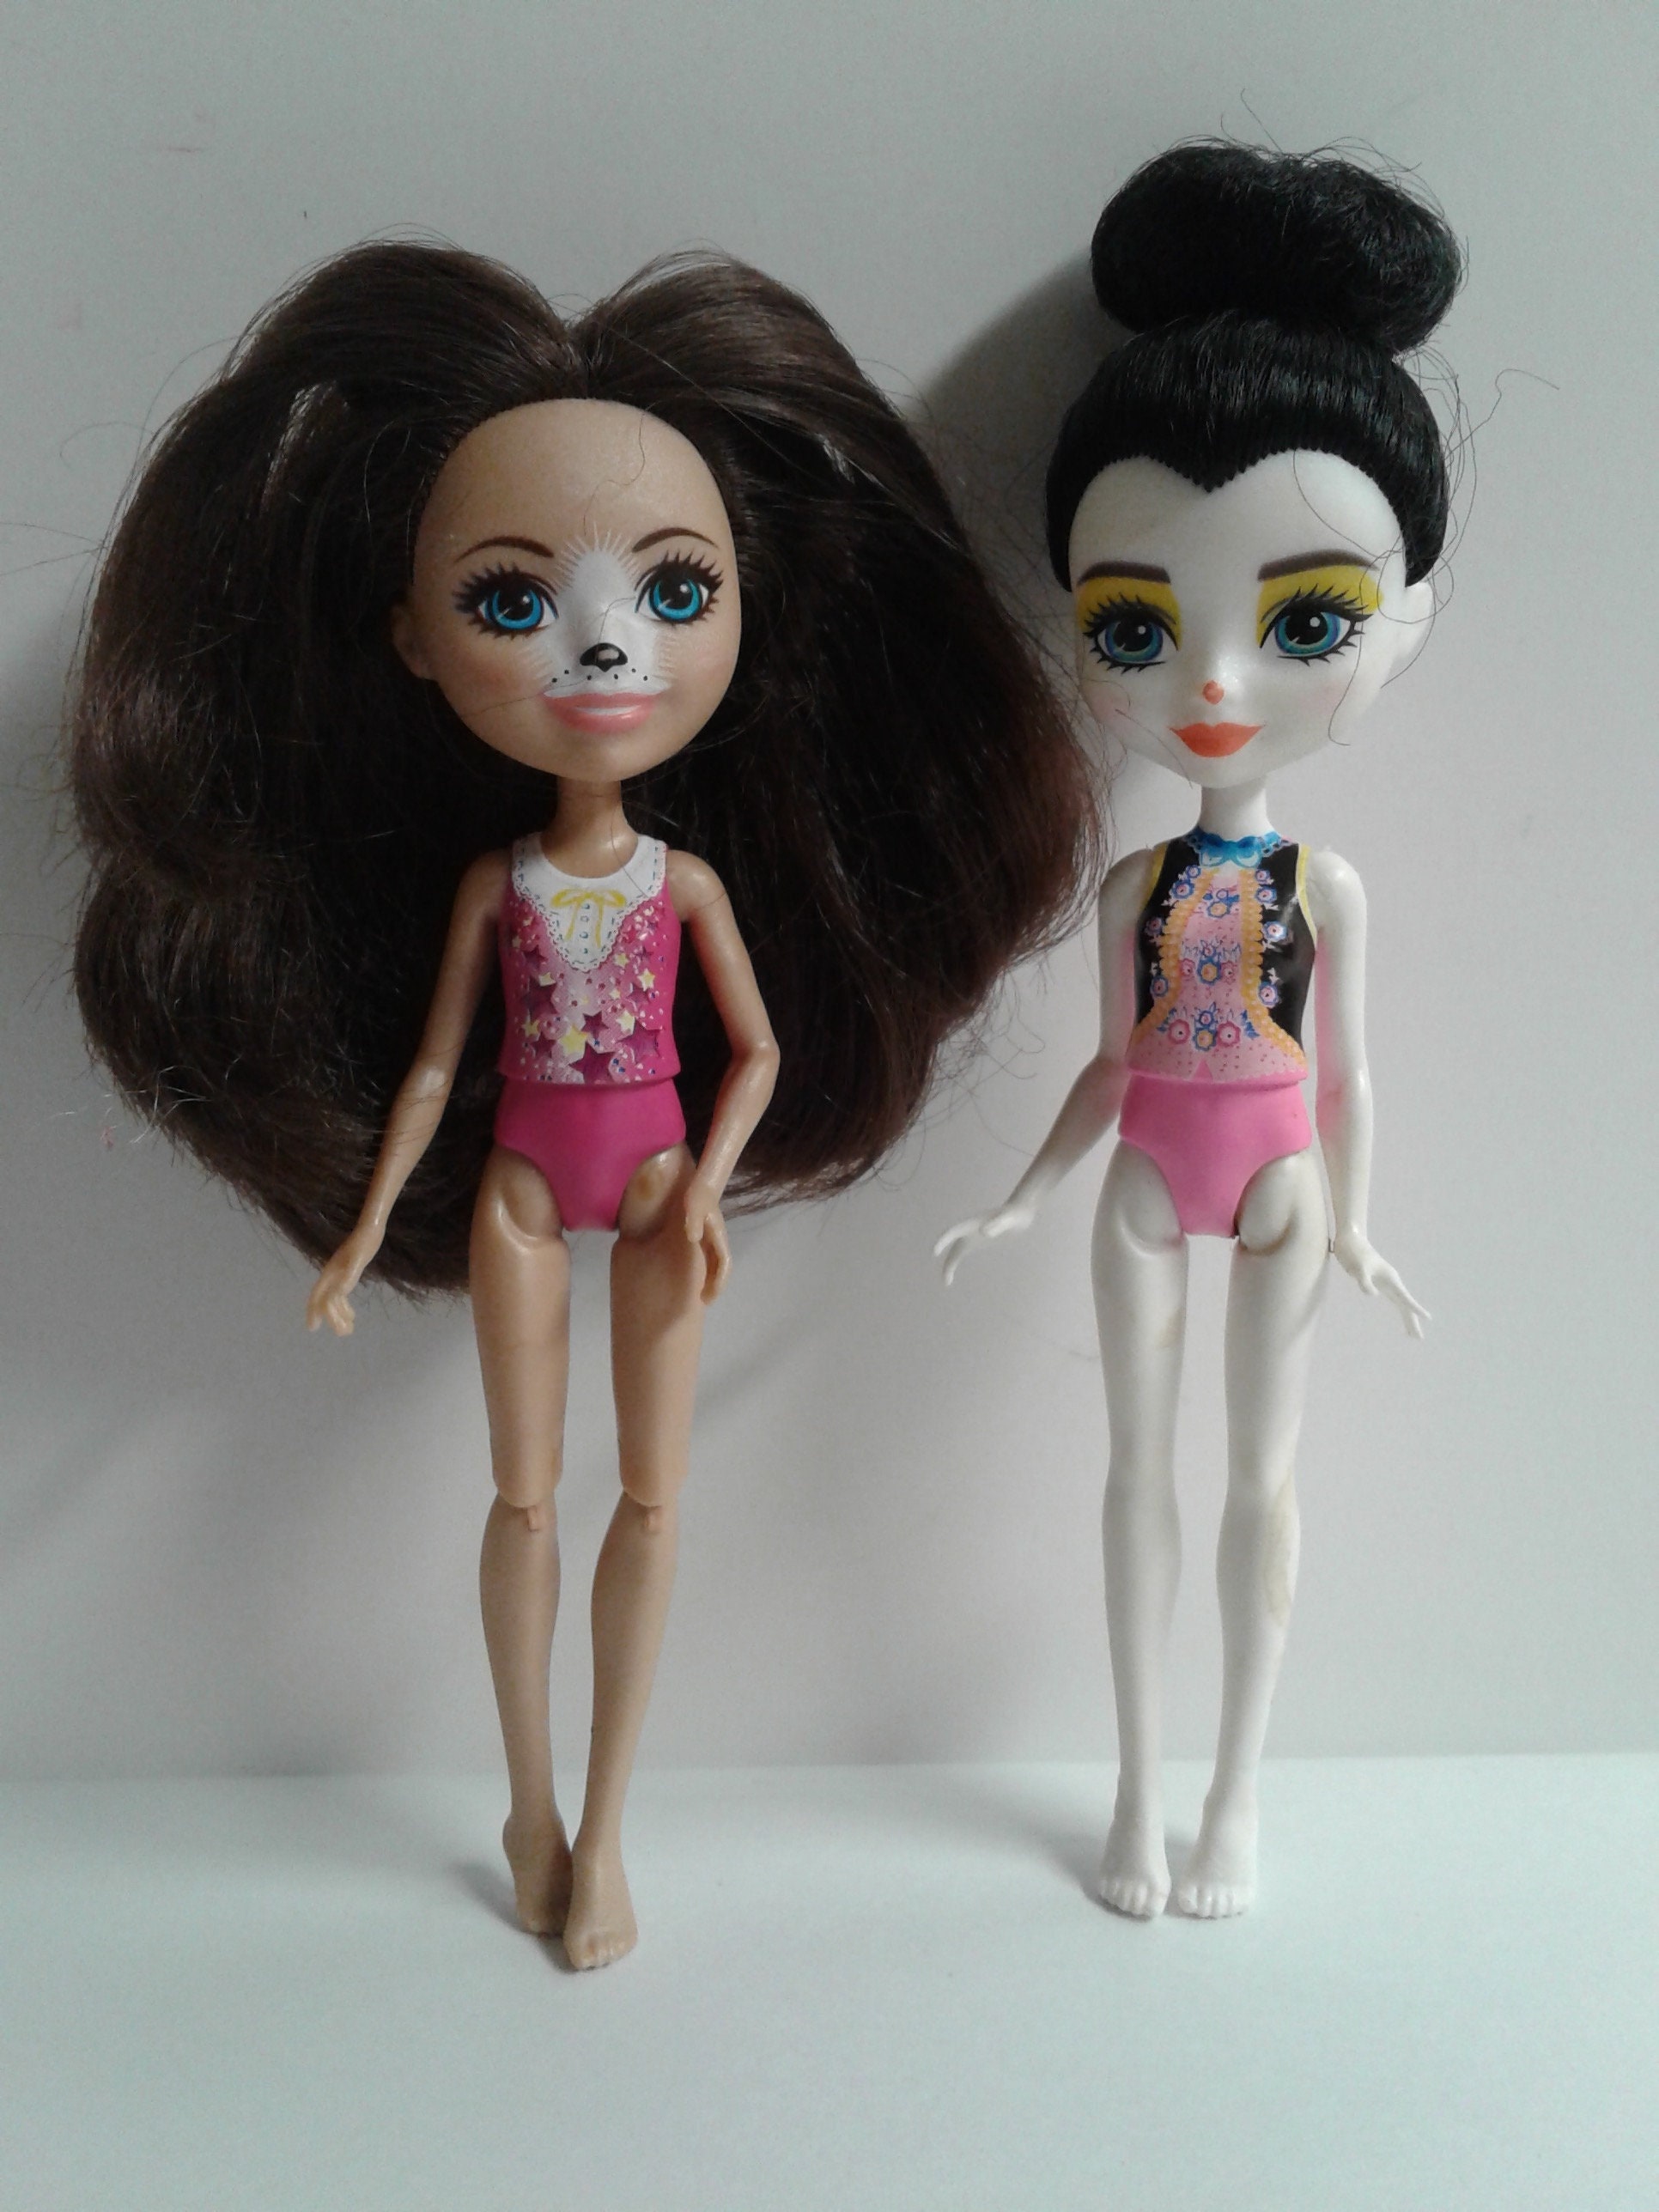 Lot of 2 Mattel Dolls 1186 MJ, 1, NL Indonesia 6 Inch 